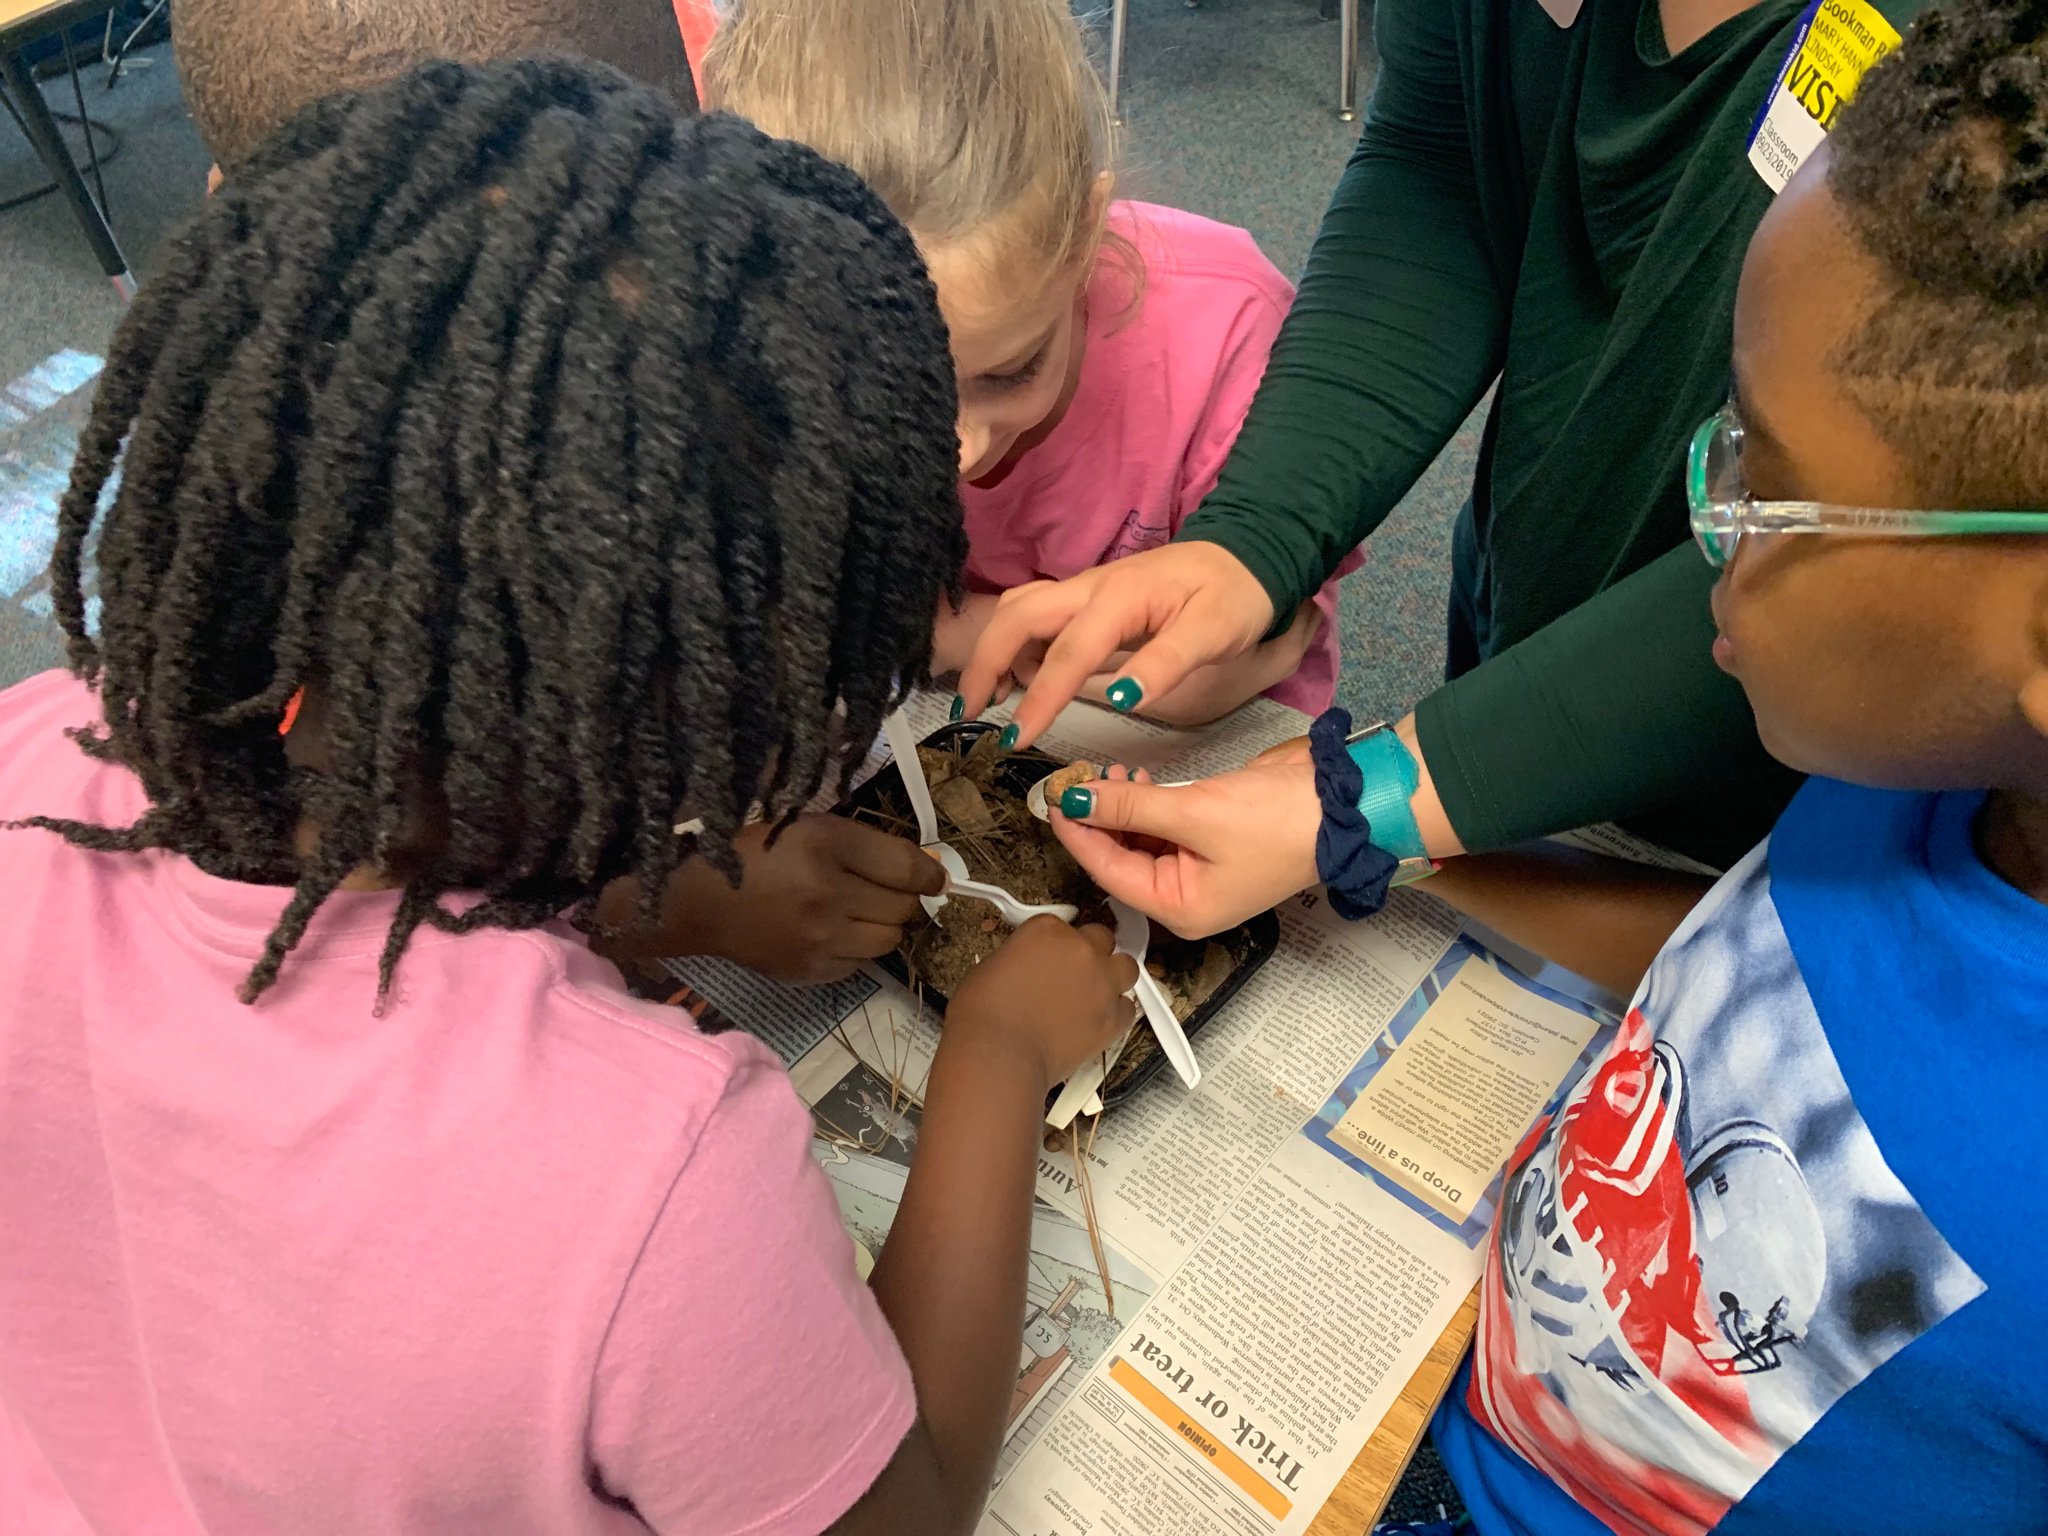 Elementary students examine earthworms